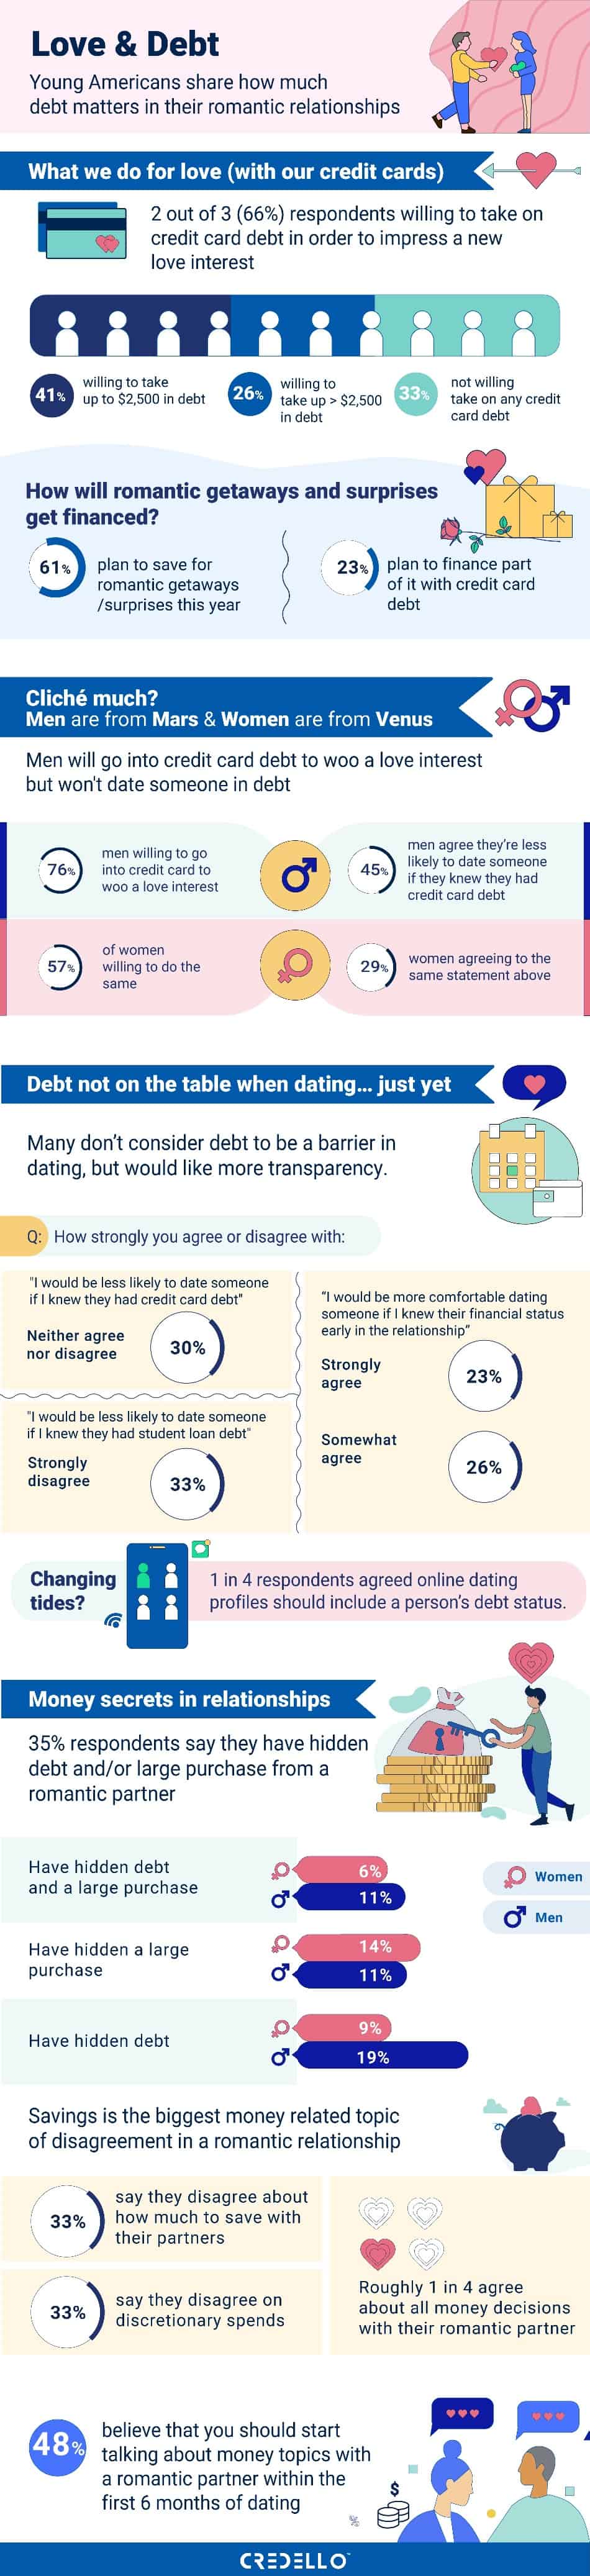 Love-Debt-Infographic